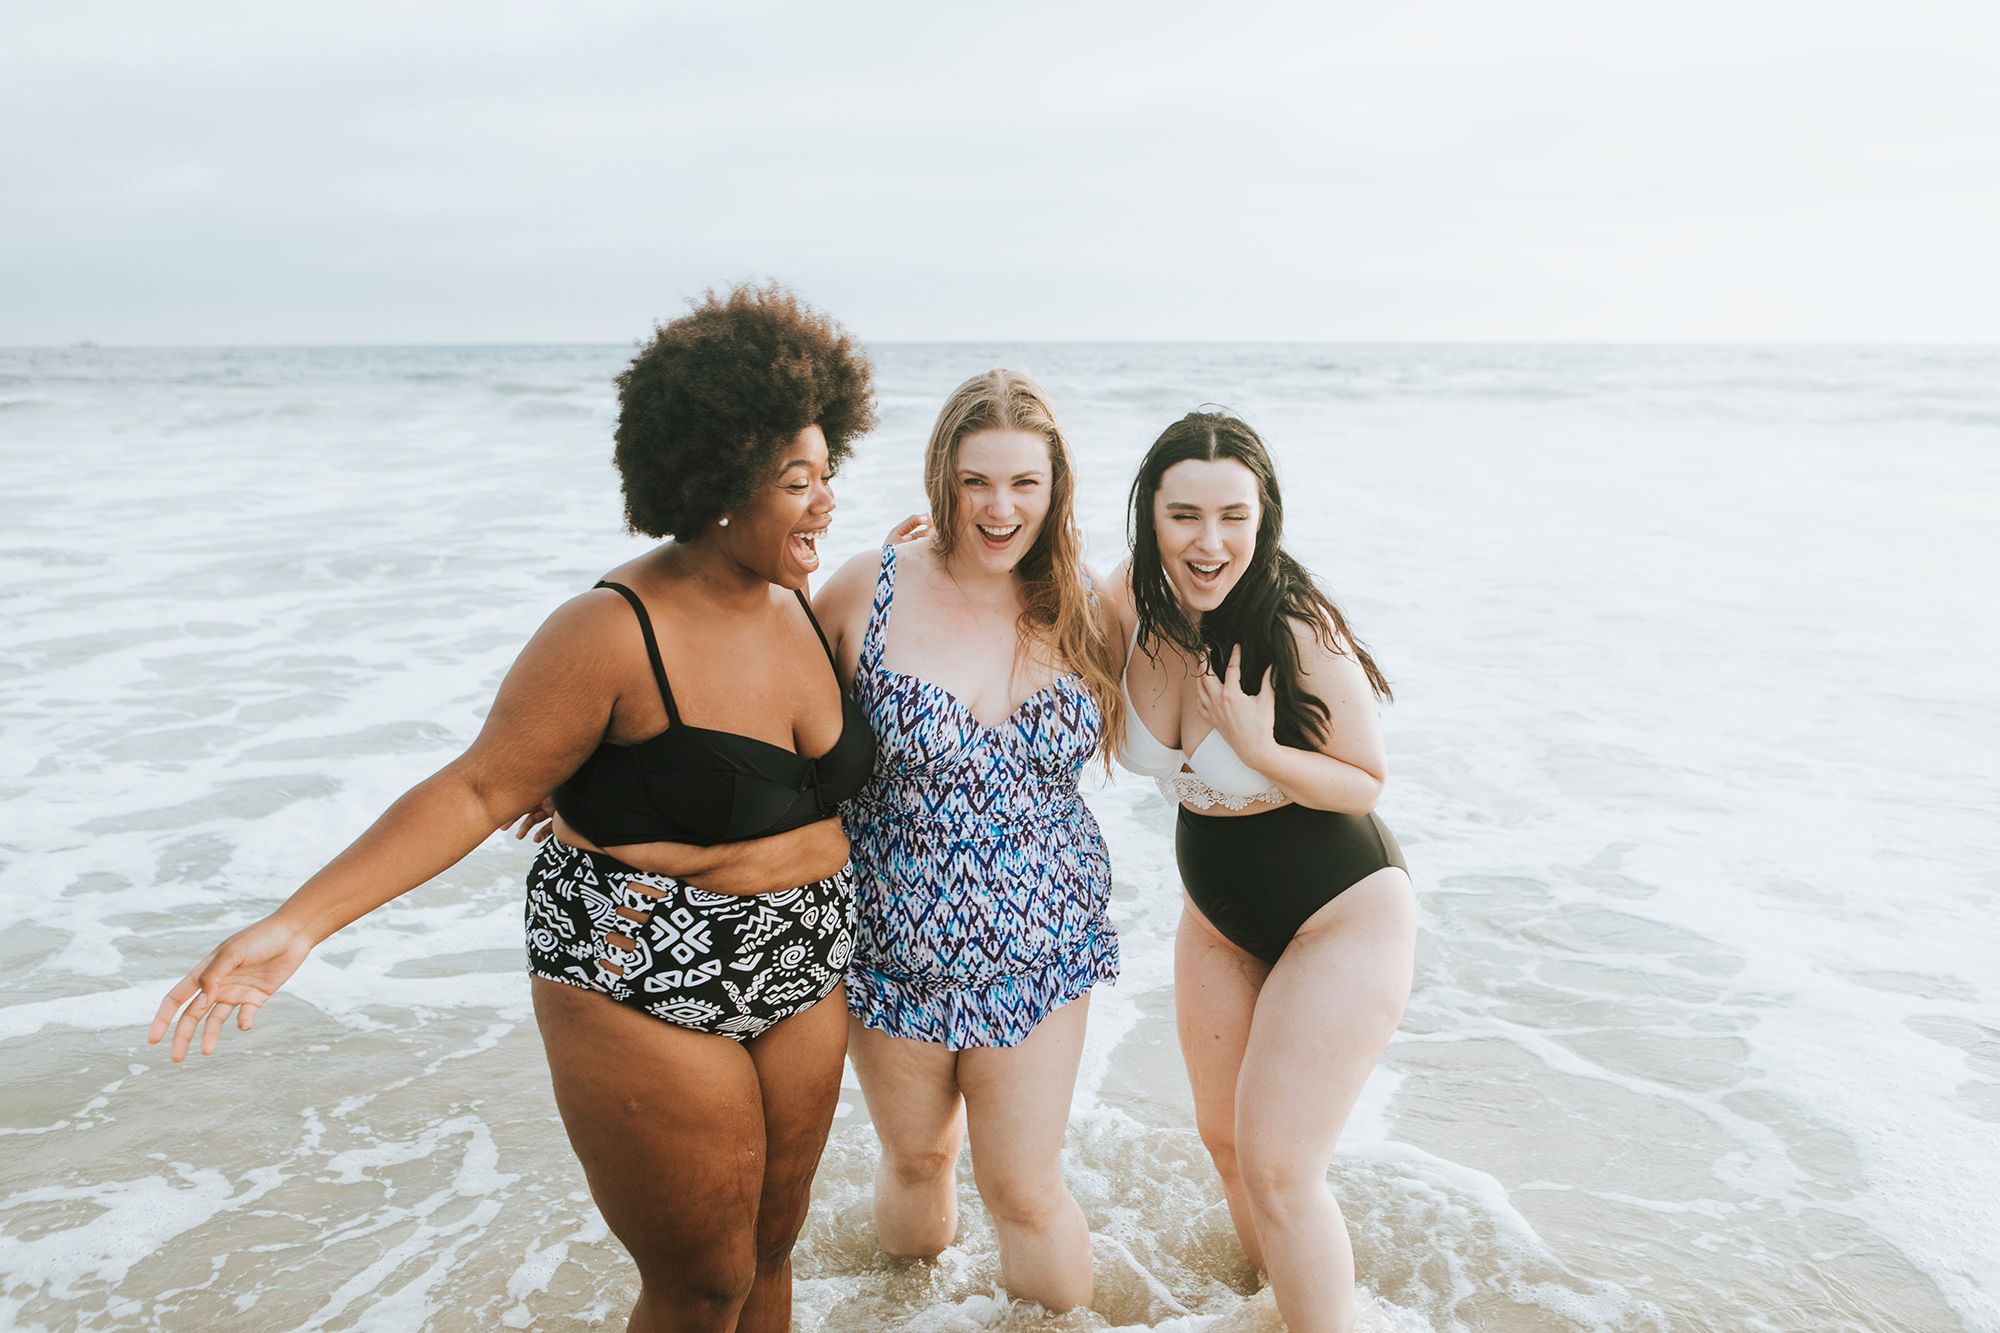 Drei Frauen im Bikini am Strand